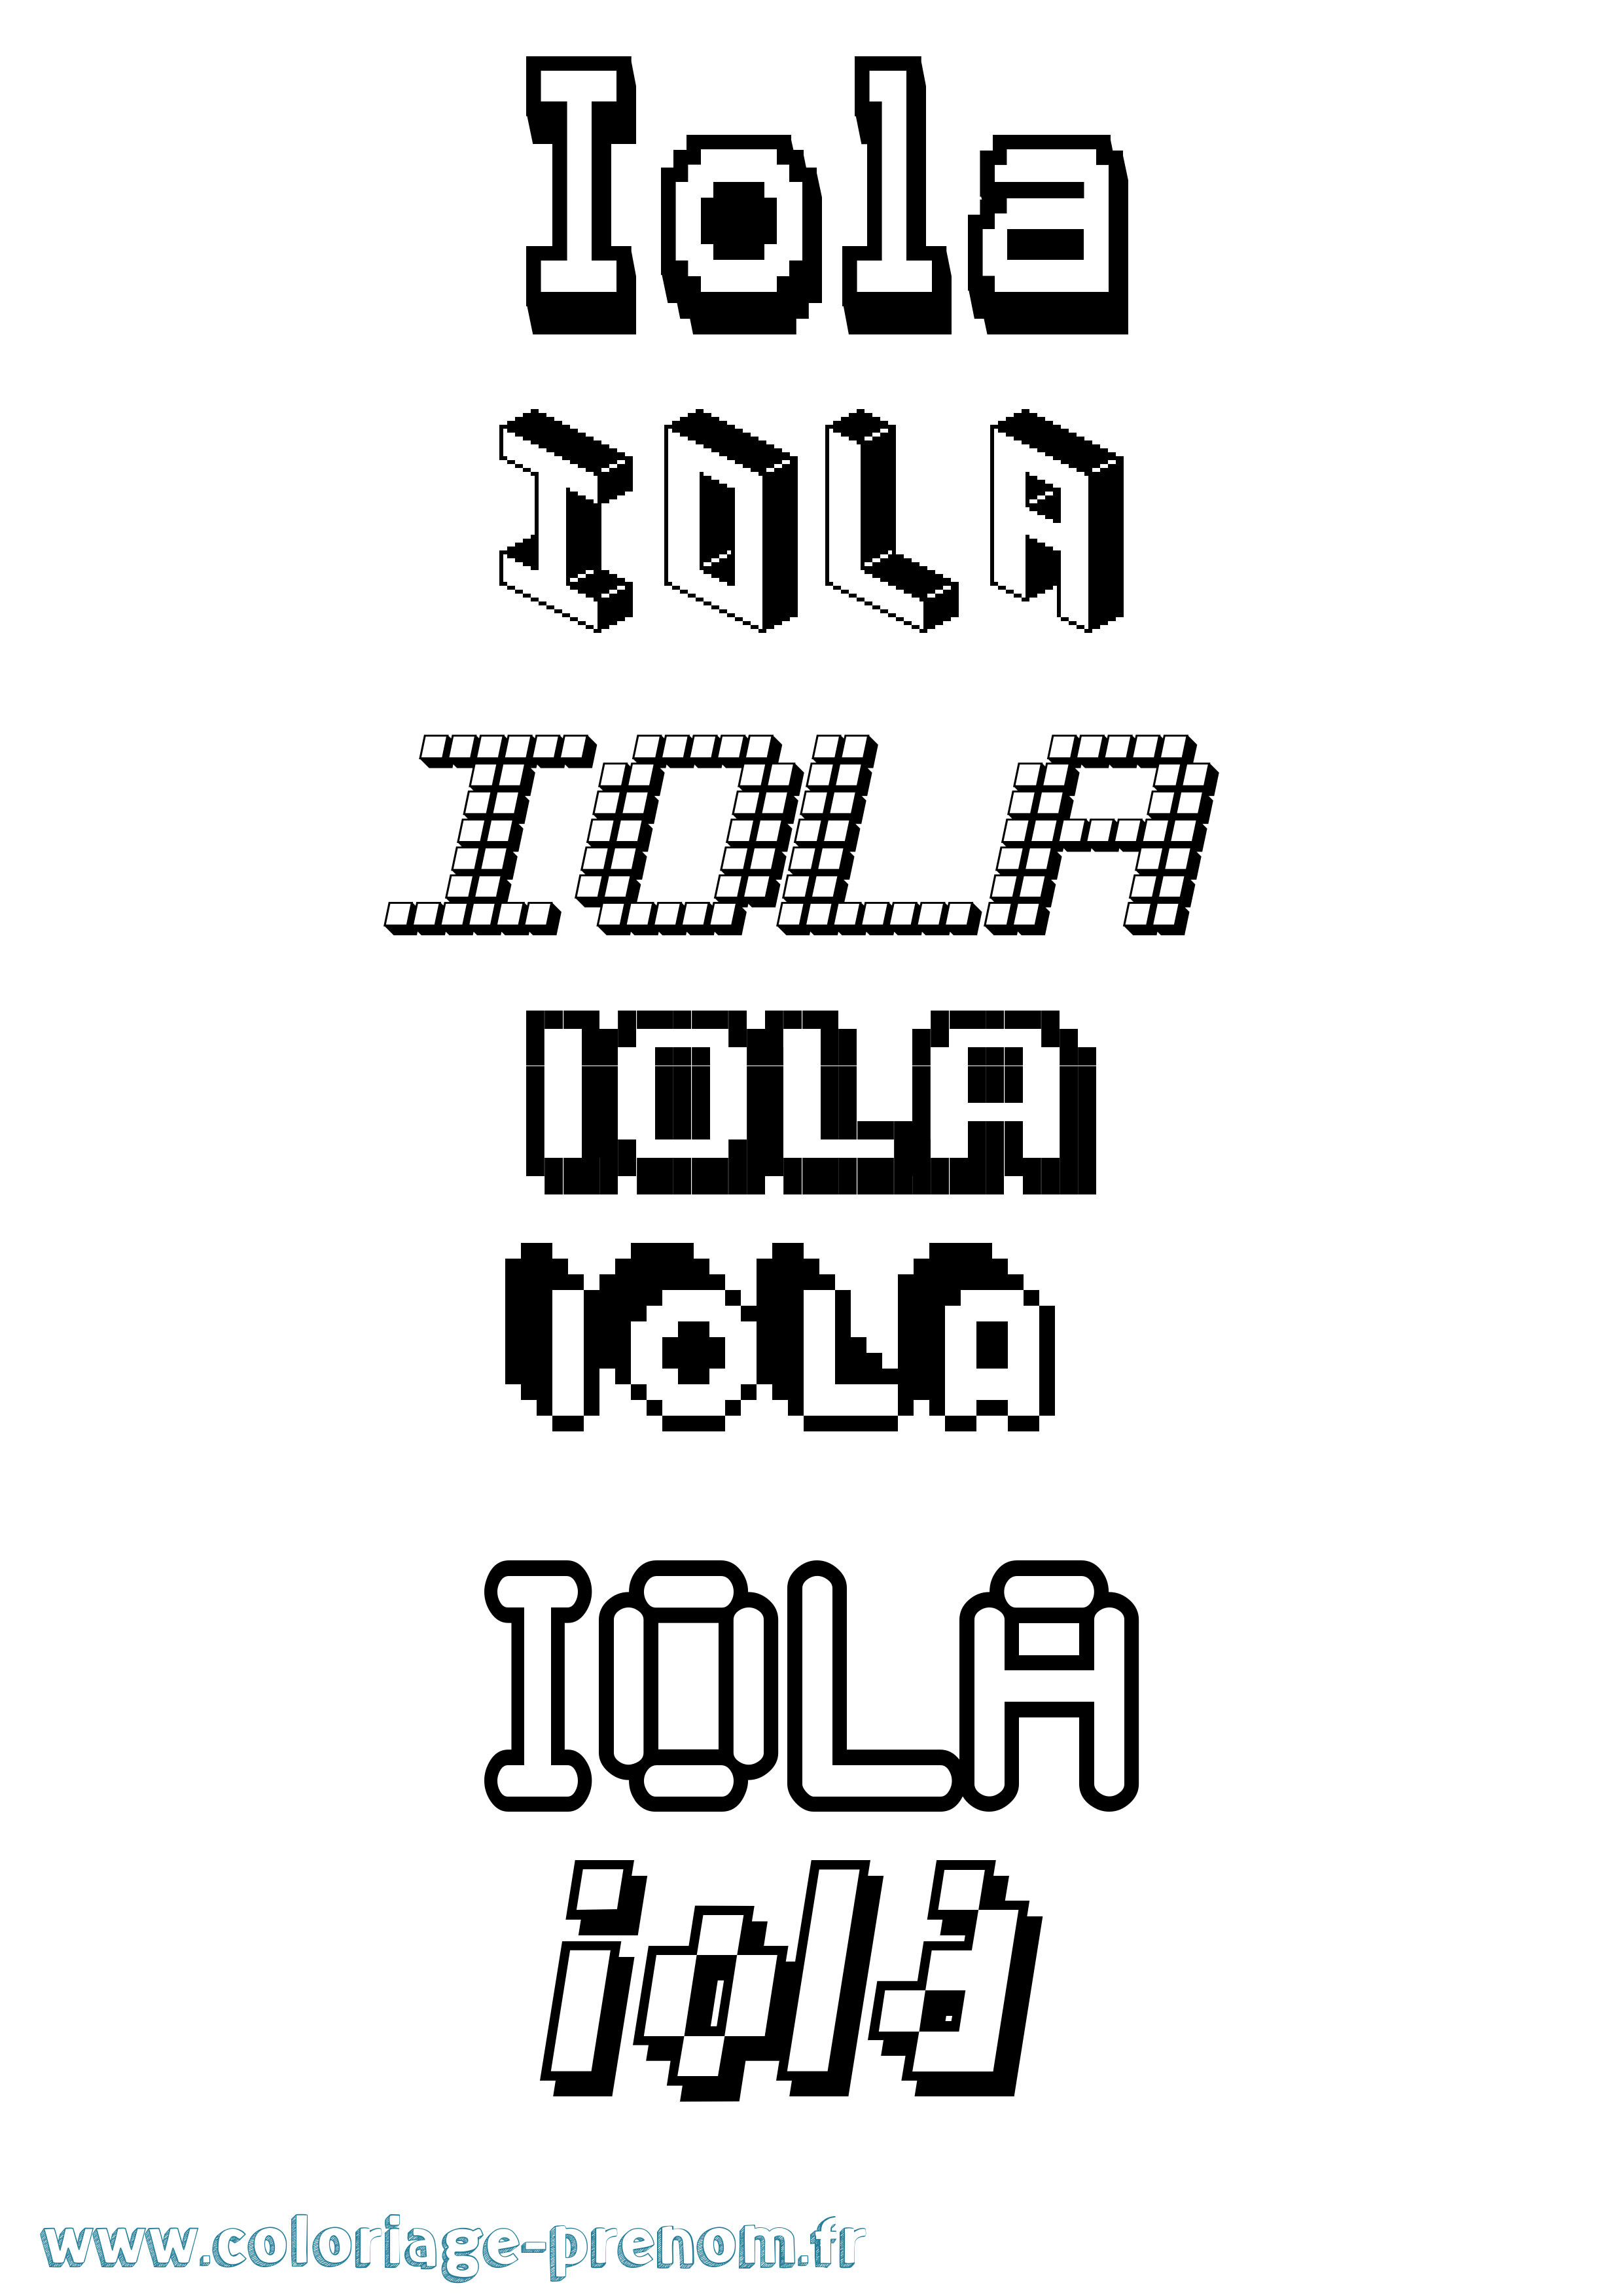 Coloriage prénom Iola Pixel